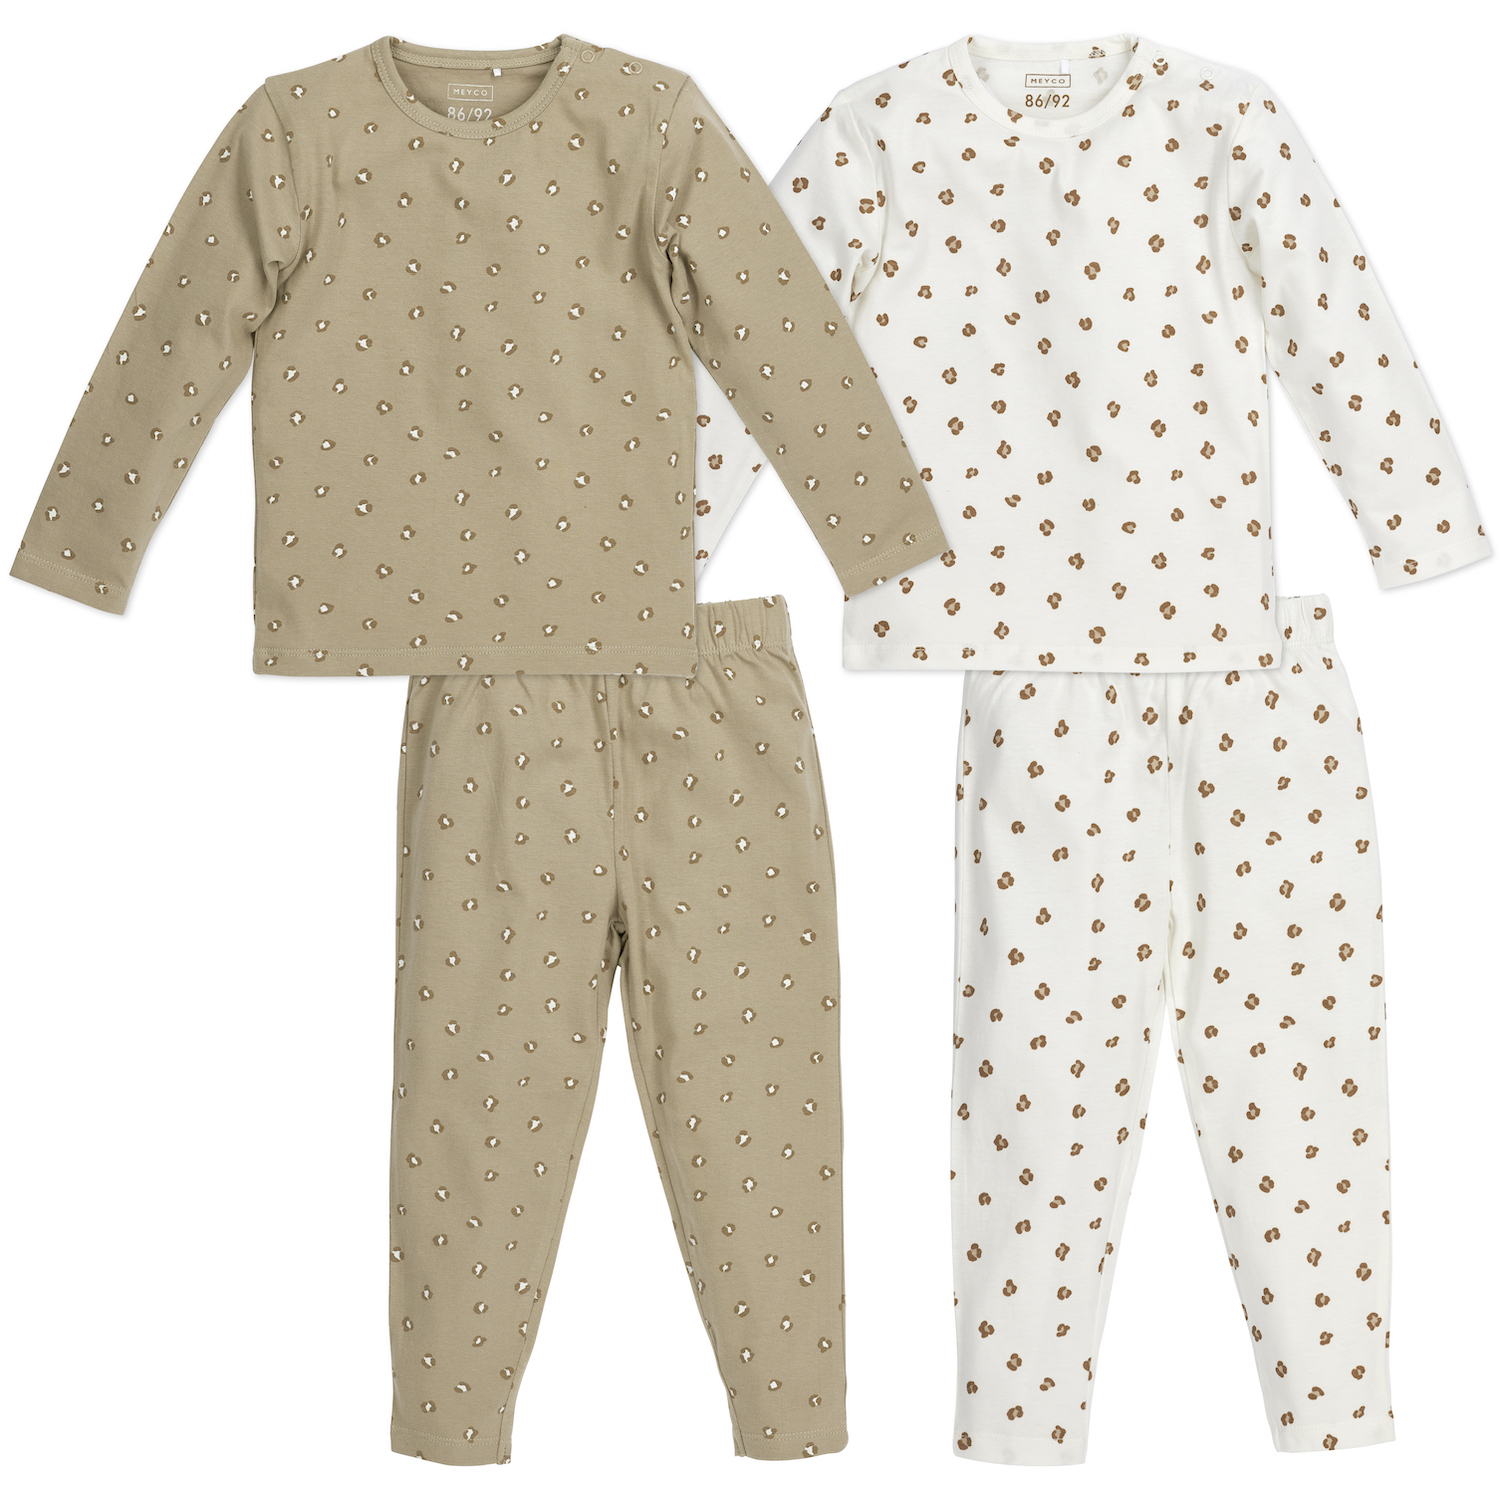 Plantkunde zuiverheid marketing Pyjama's